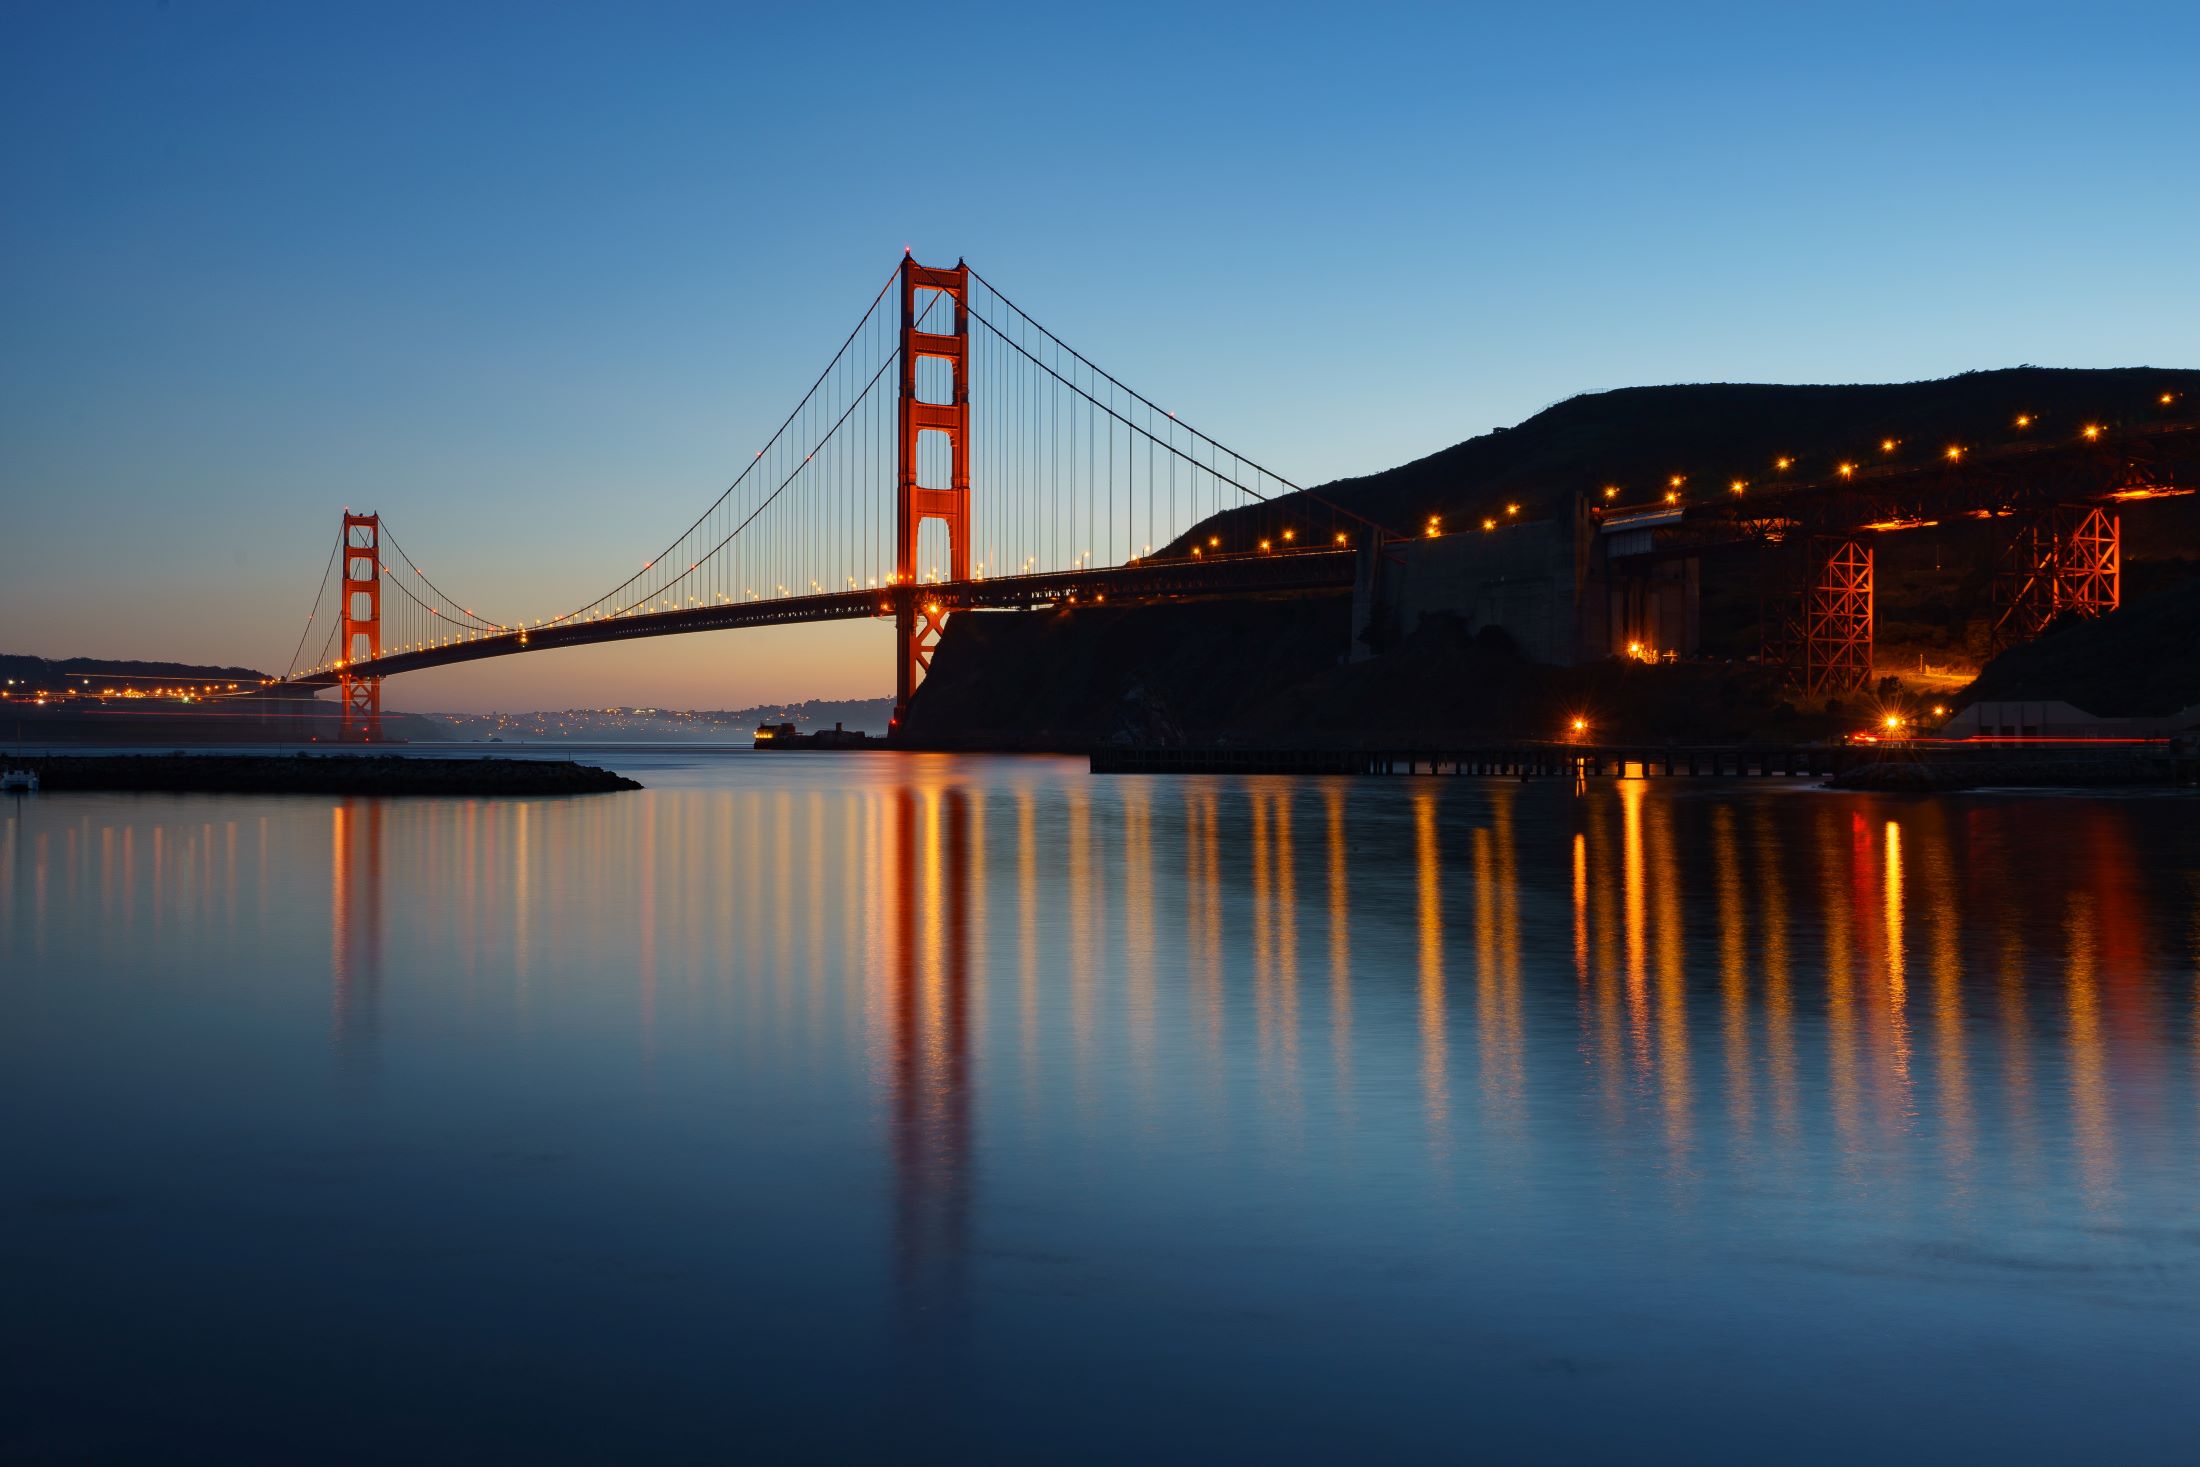 An image of San Francisco Bay Area's Golden Gate Bridge.